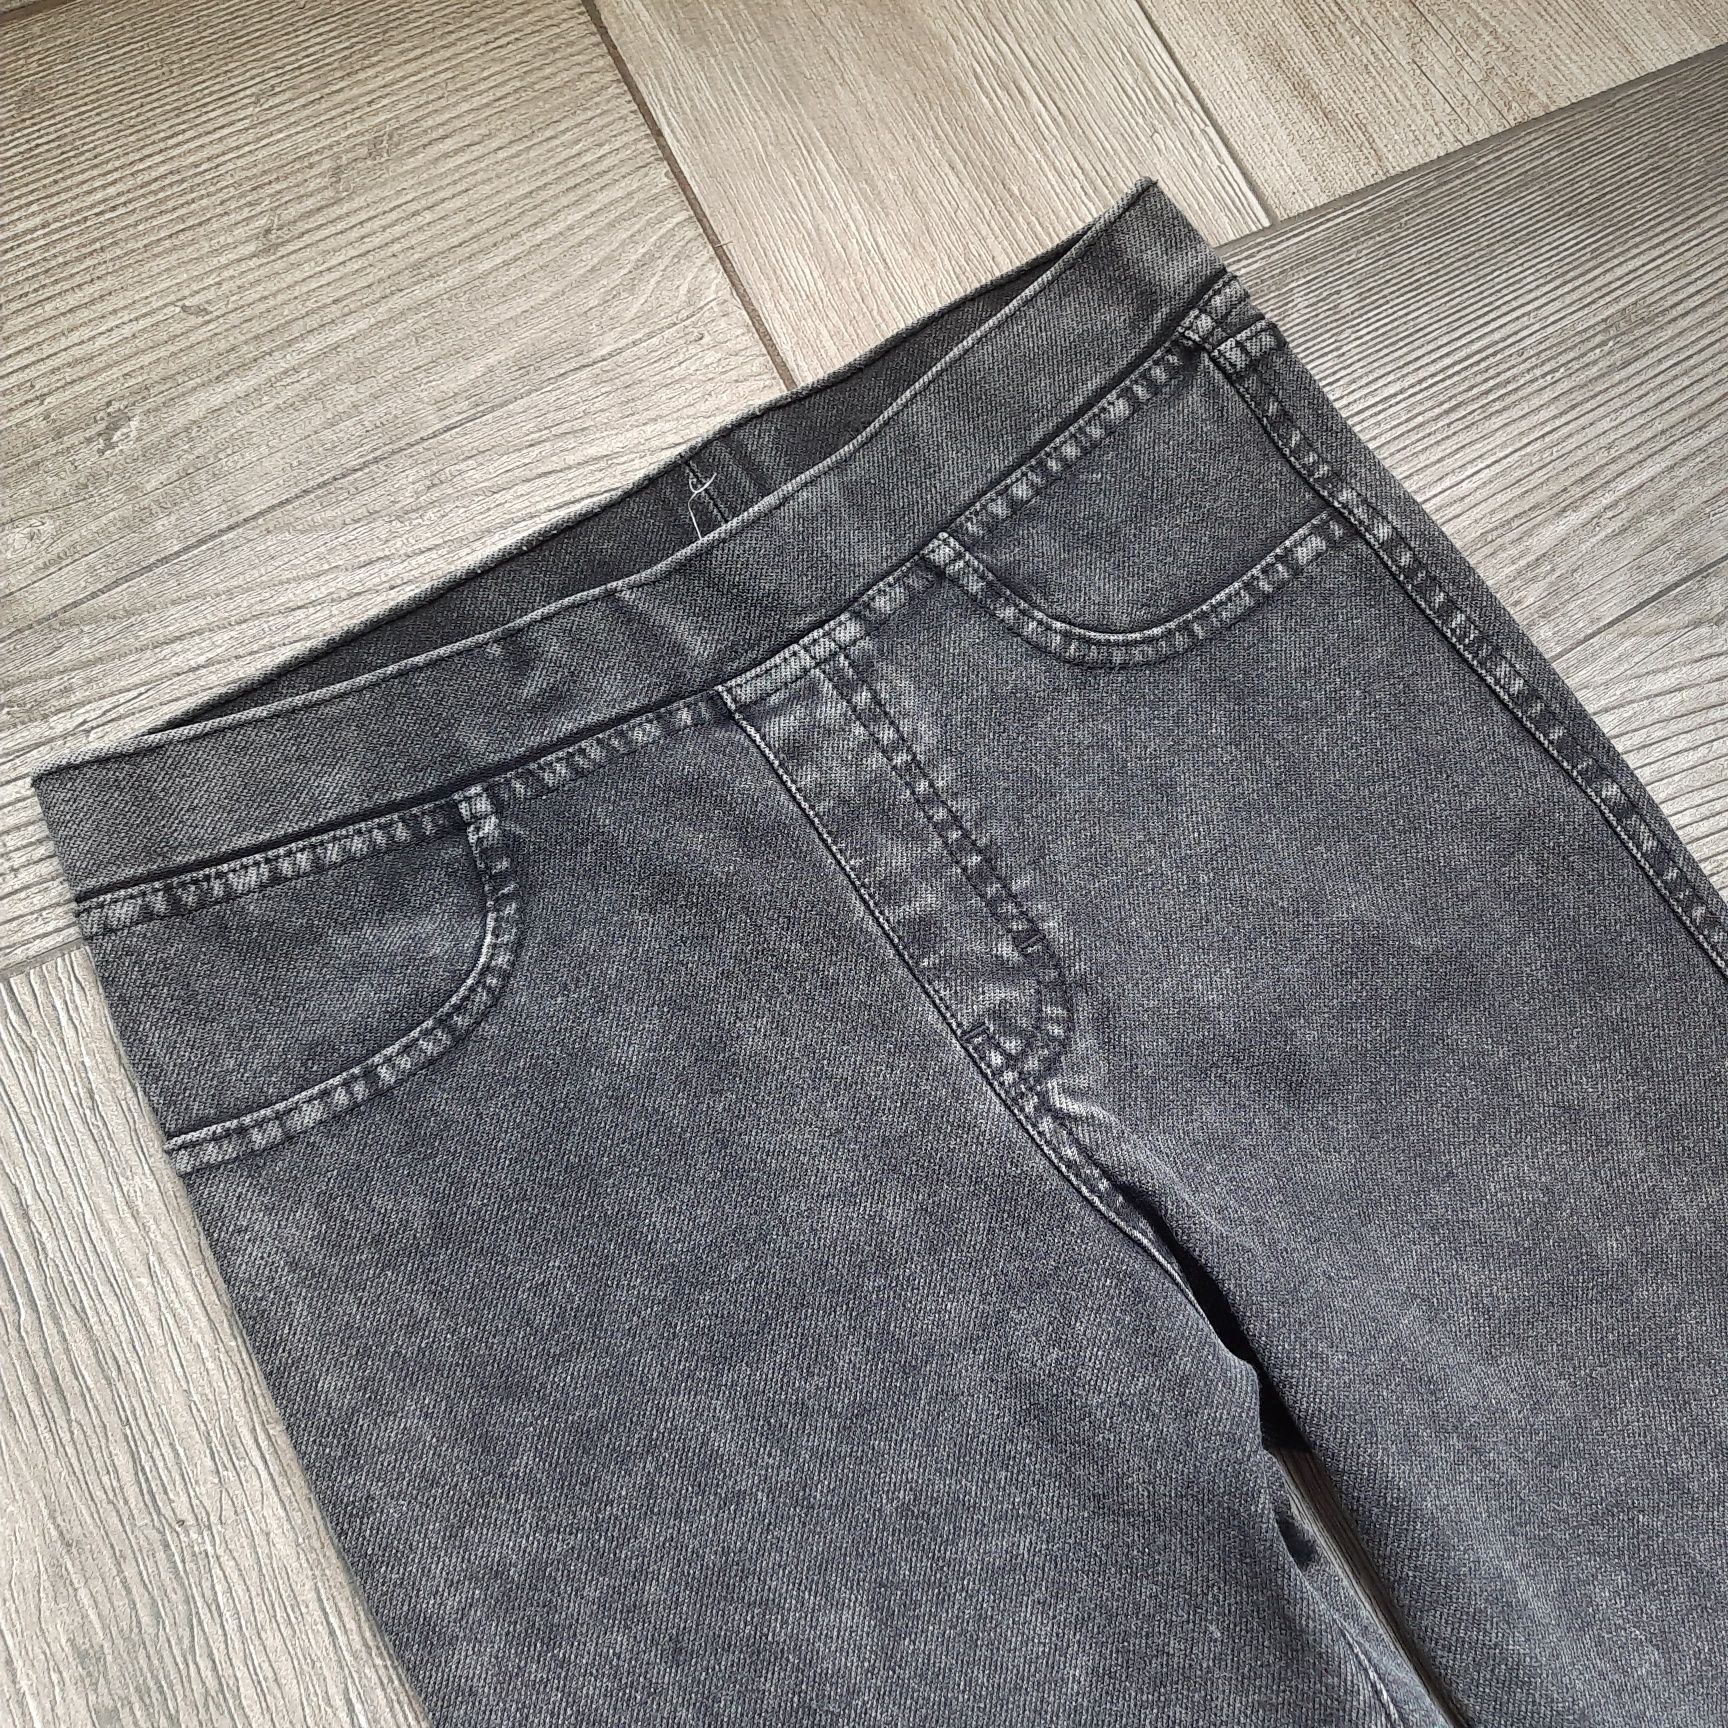 Легенькі сірі джеггінси,джинси H&M.Легкие джеггинсы,джинсы